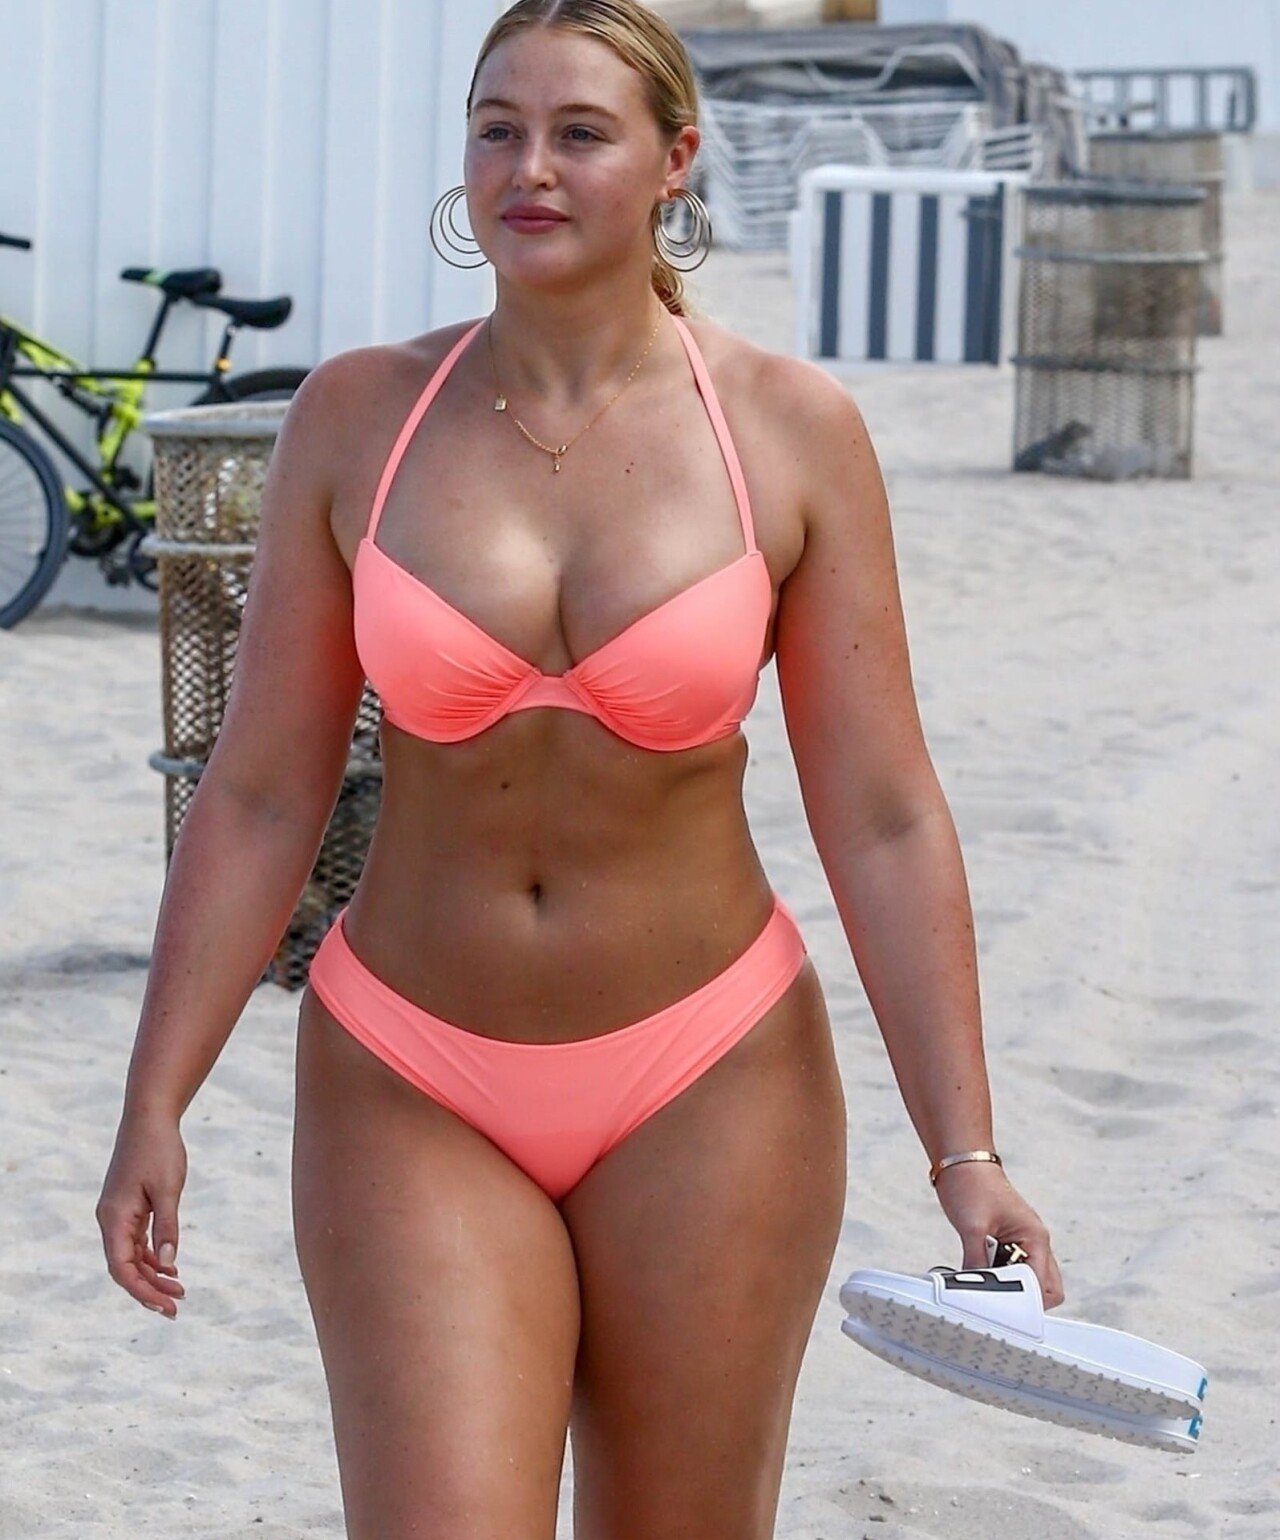 Iskra-Lawrence-Pink-Bikini-Miami-2018 (1).jpg ㅇㅎ) 몸무게 90kg 여자 패션모델